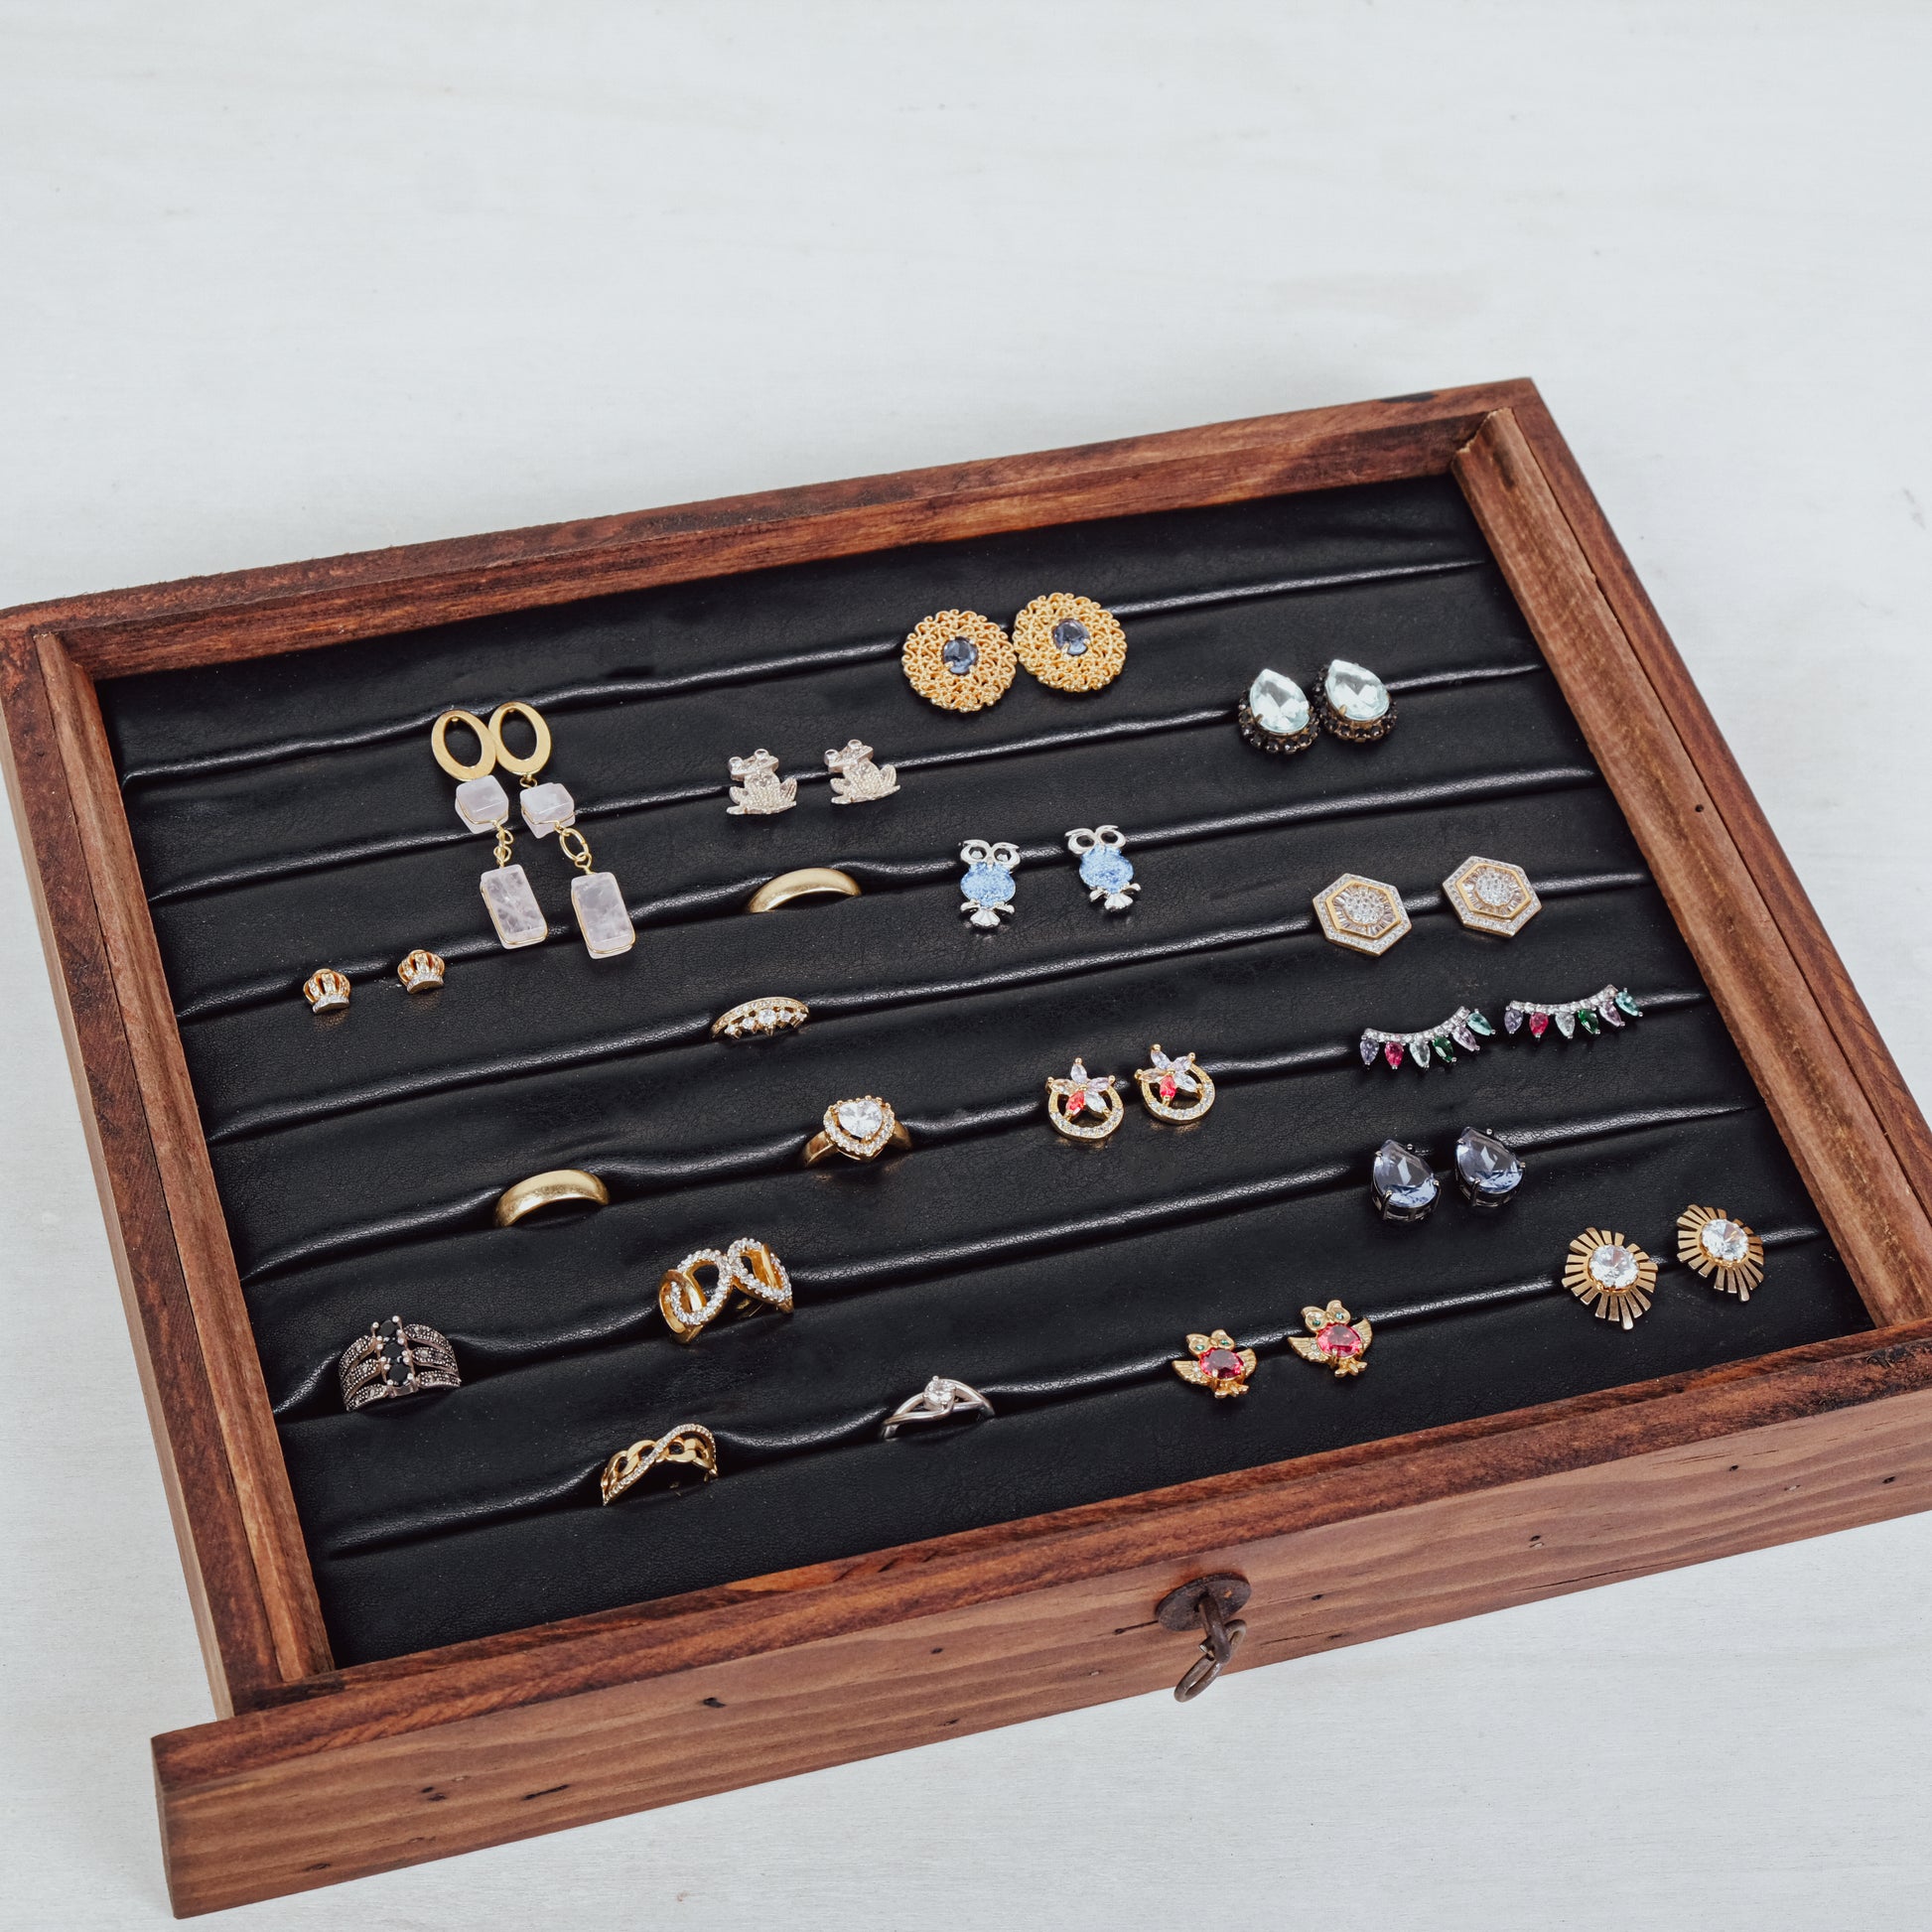 Findingking 5 Drawer Jewelry Organizer Storage Display Case Box w/Inserts